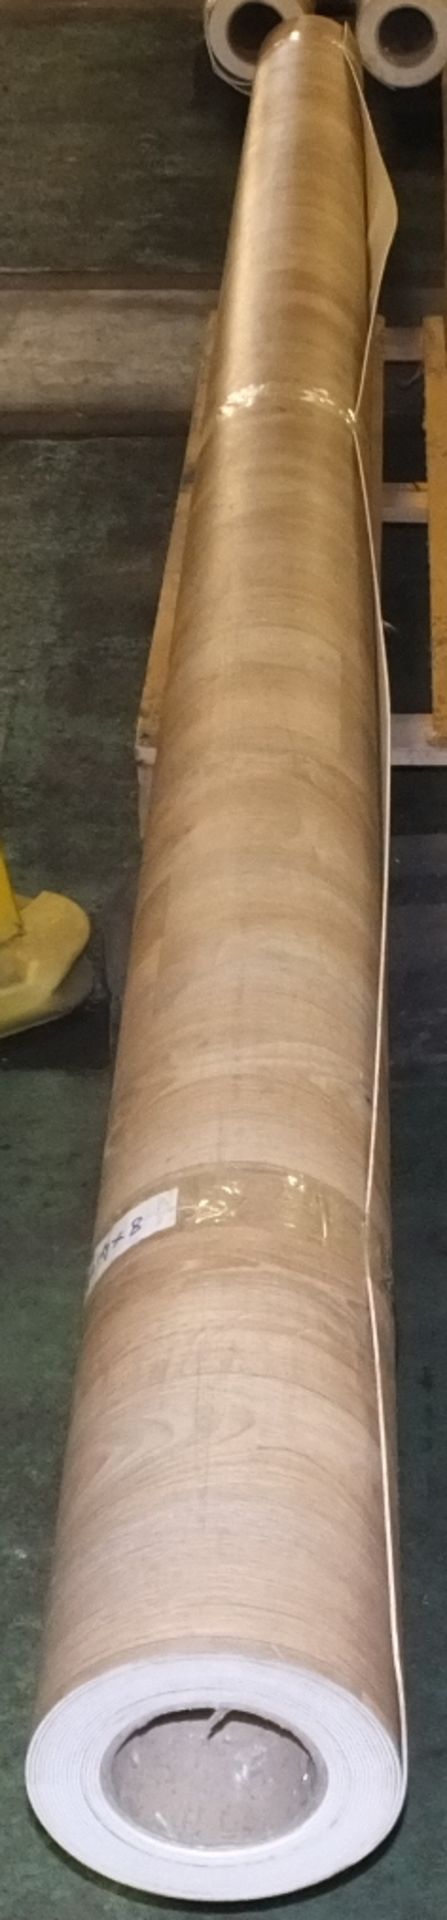 Wooden Laminate Effect Flooring - 8M x 4M approx